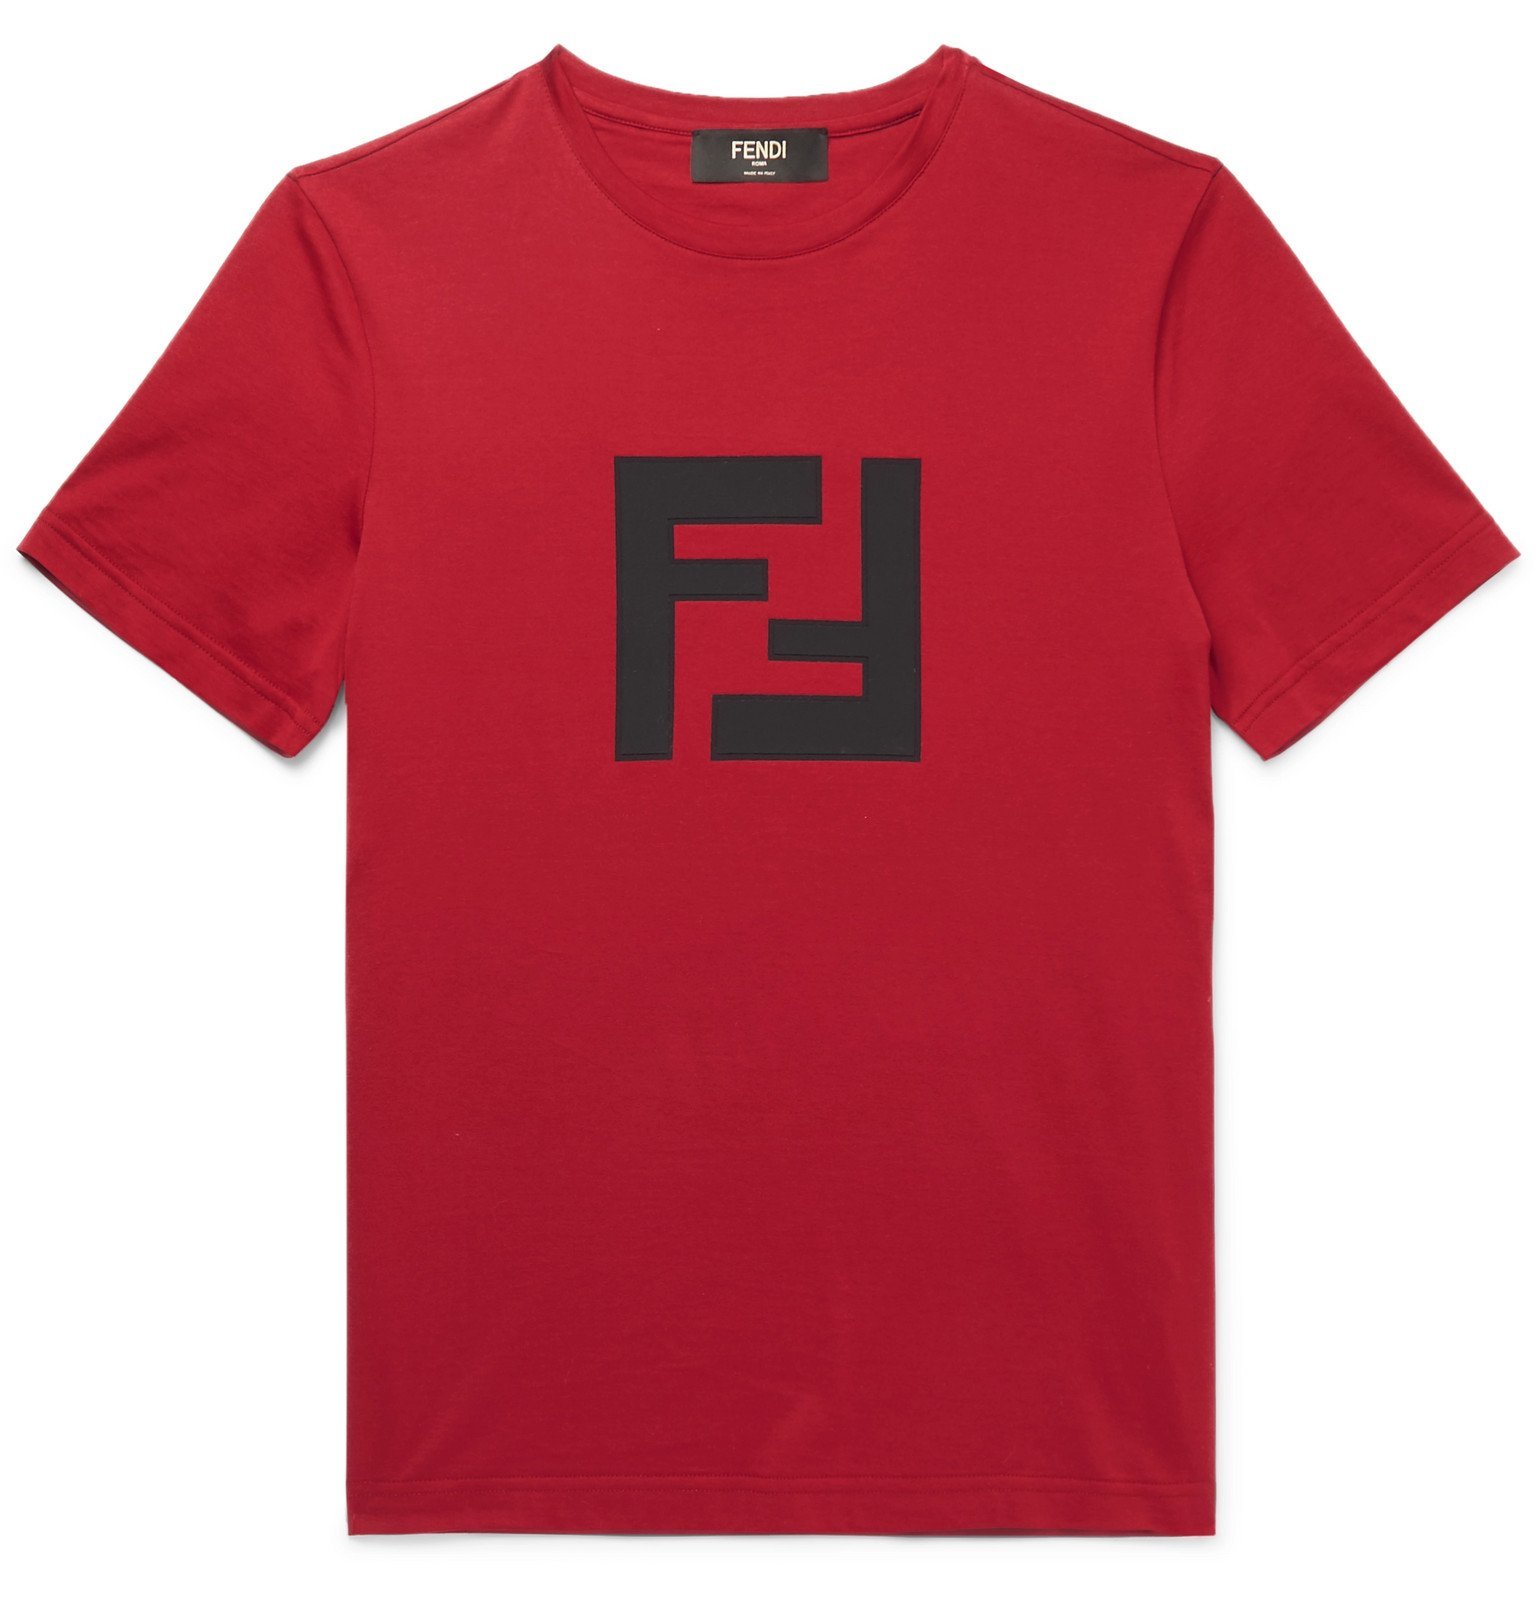 Fendi - Slim-Fit Logo-Appliquéd Cotton-Jersey T-Shirt - Red Fendi